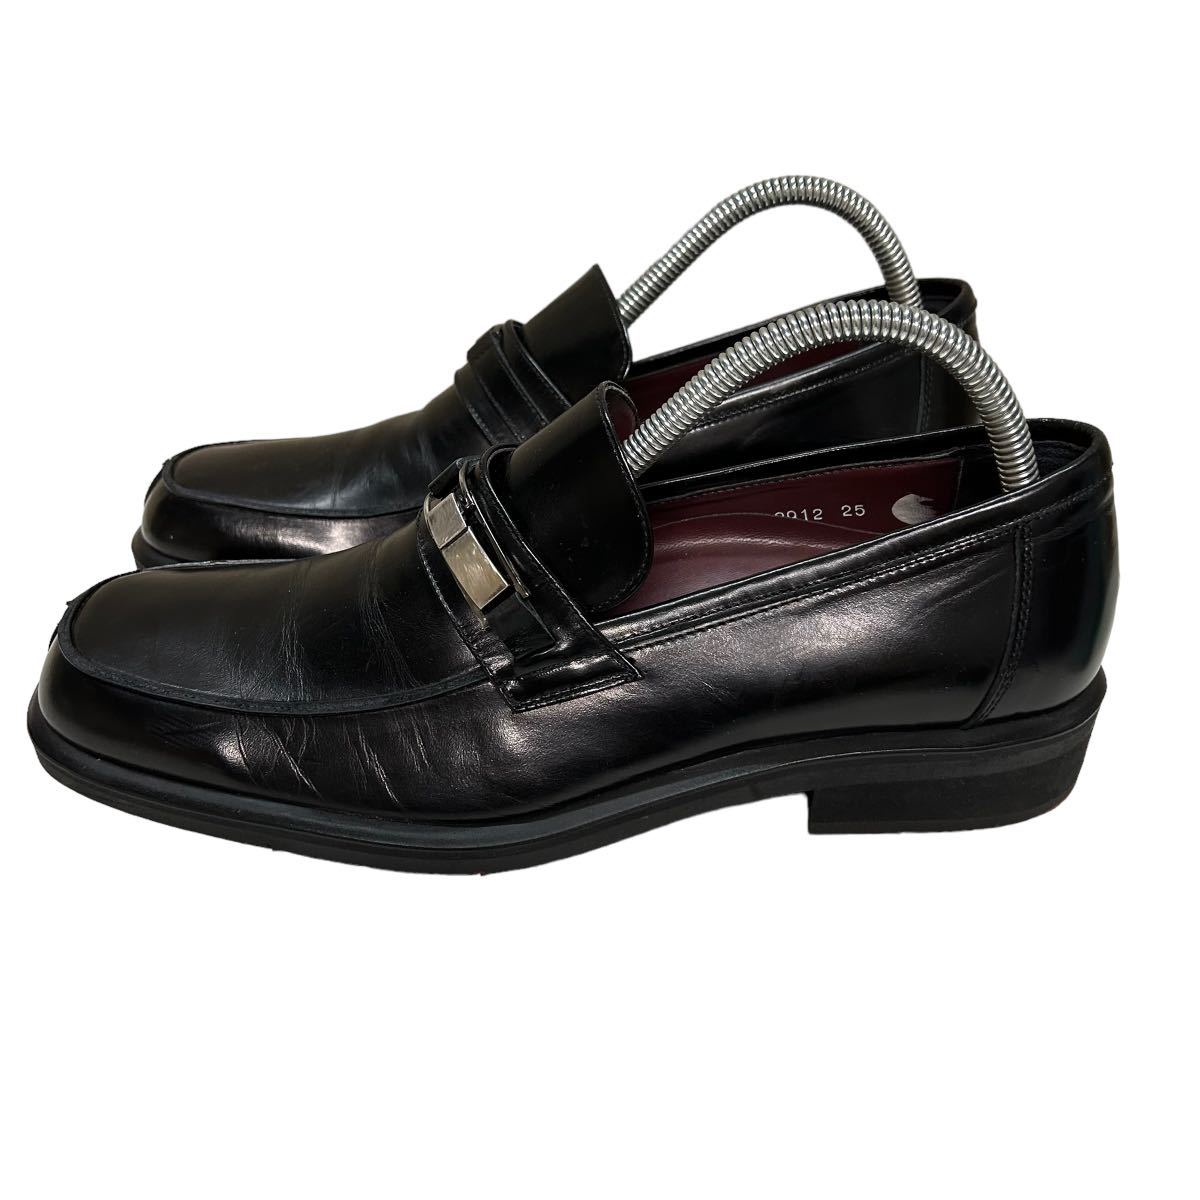 BB560 日本製 GUESS ゲス ビットローファー ビジネスシューズ 革靴 レザー 25cm ブラック vibram ビブラムソール_画像2